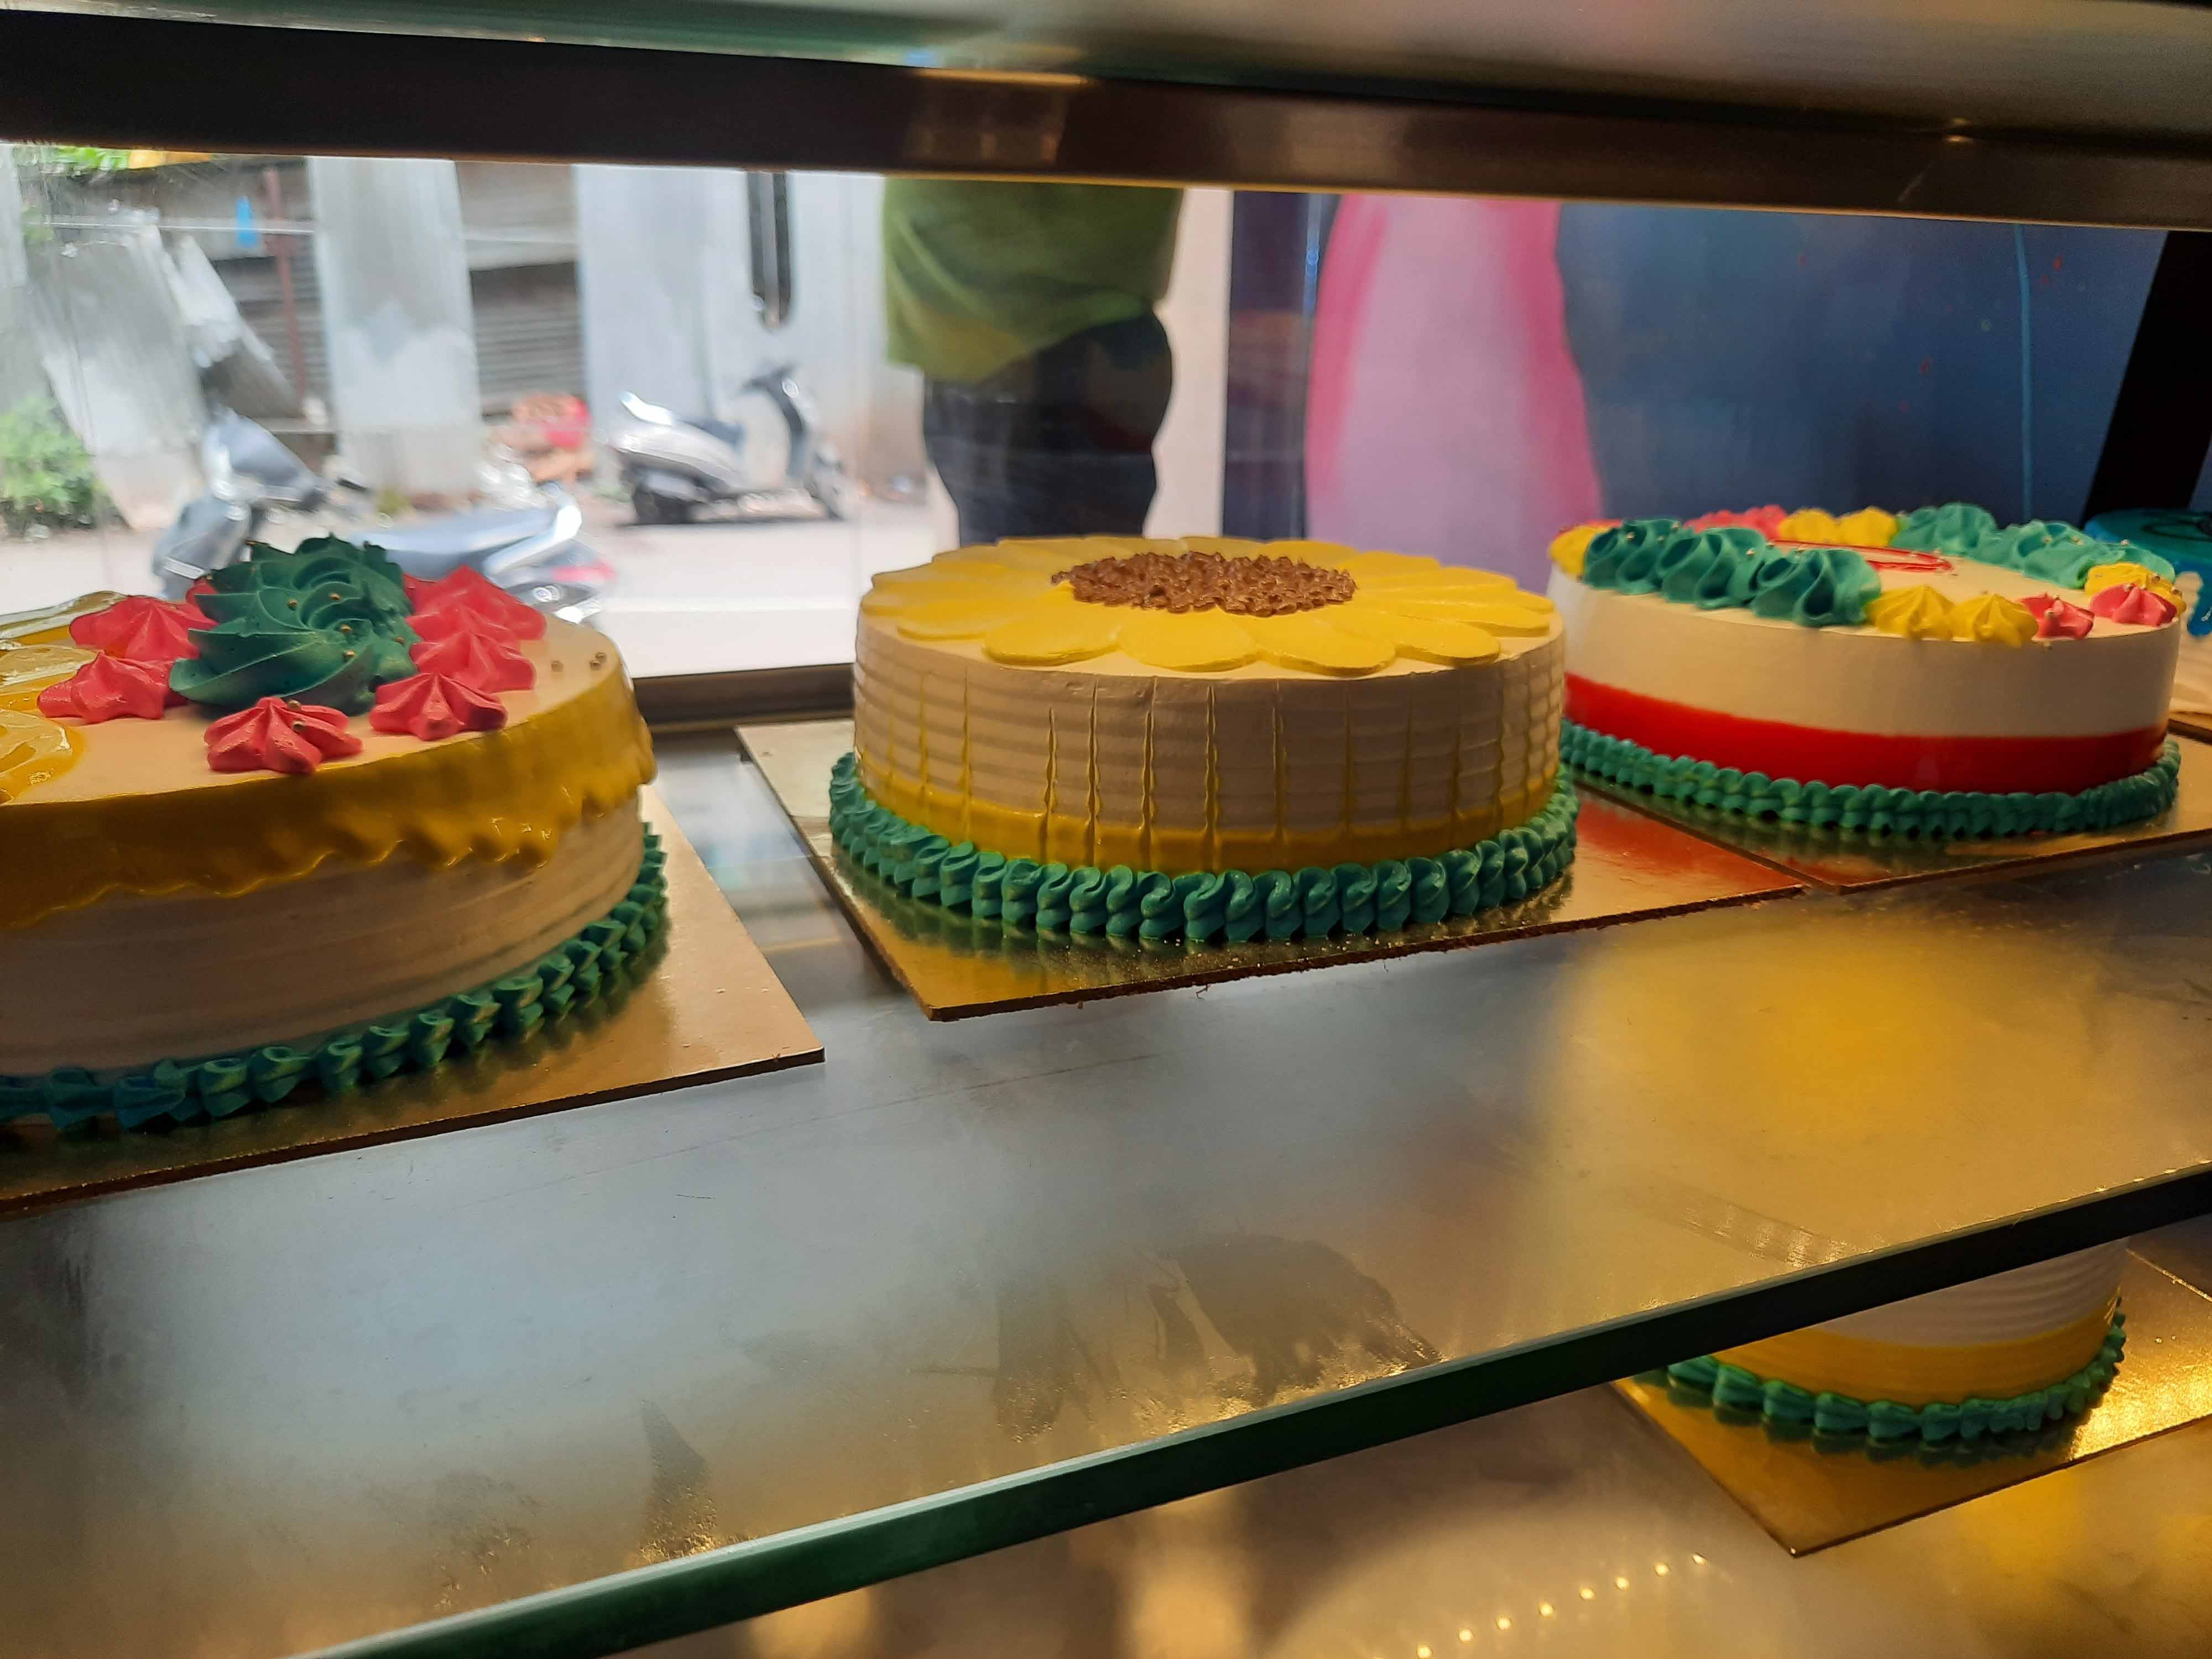 Cake World in Panvel,Mumbai - Best Cake Shops in Mumbai - Justdial